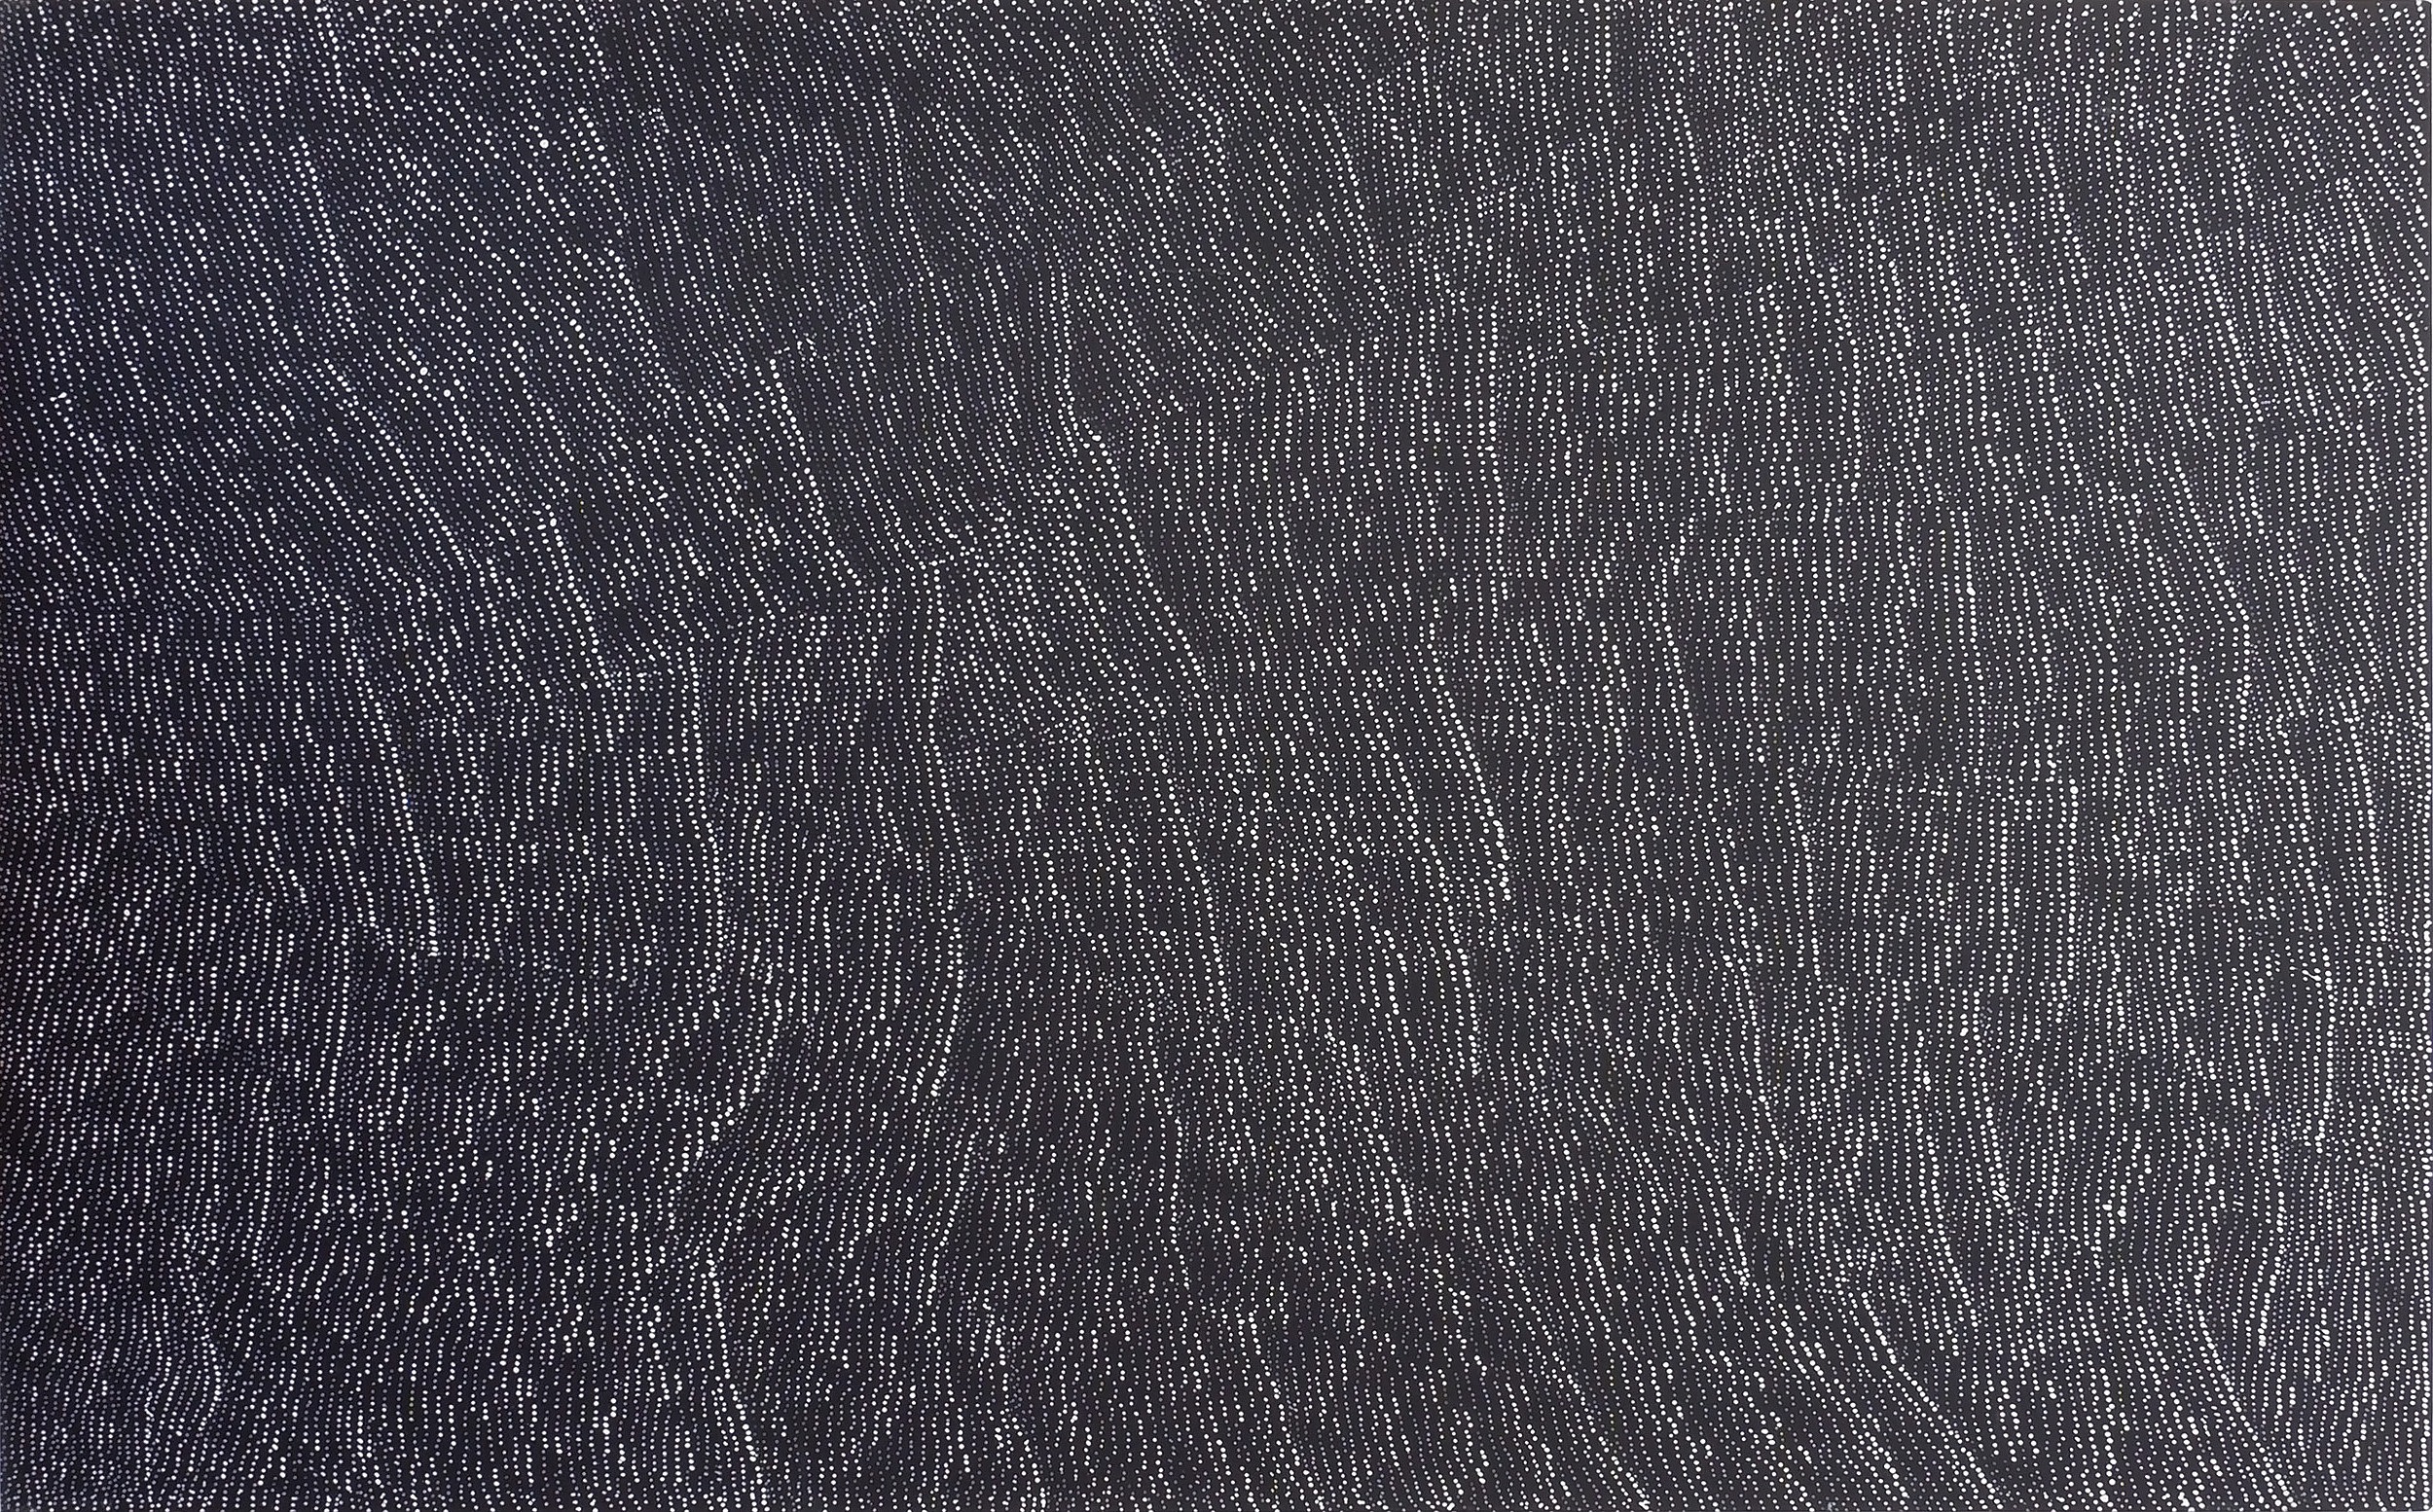 'Lily Kelly Napangardi (1948-) Tali Sand Hills 2015, Acrylic on Linen'